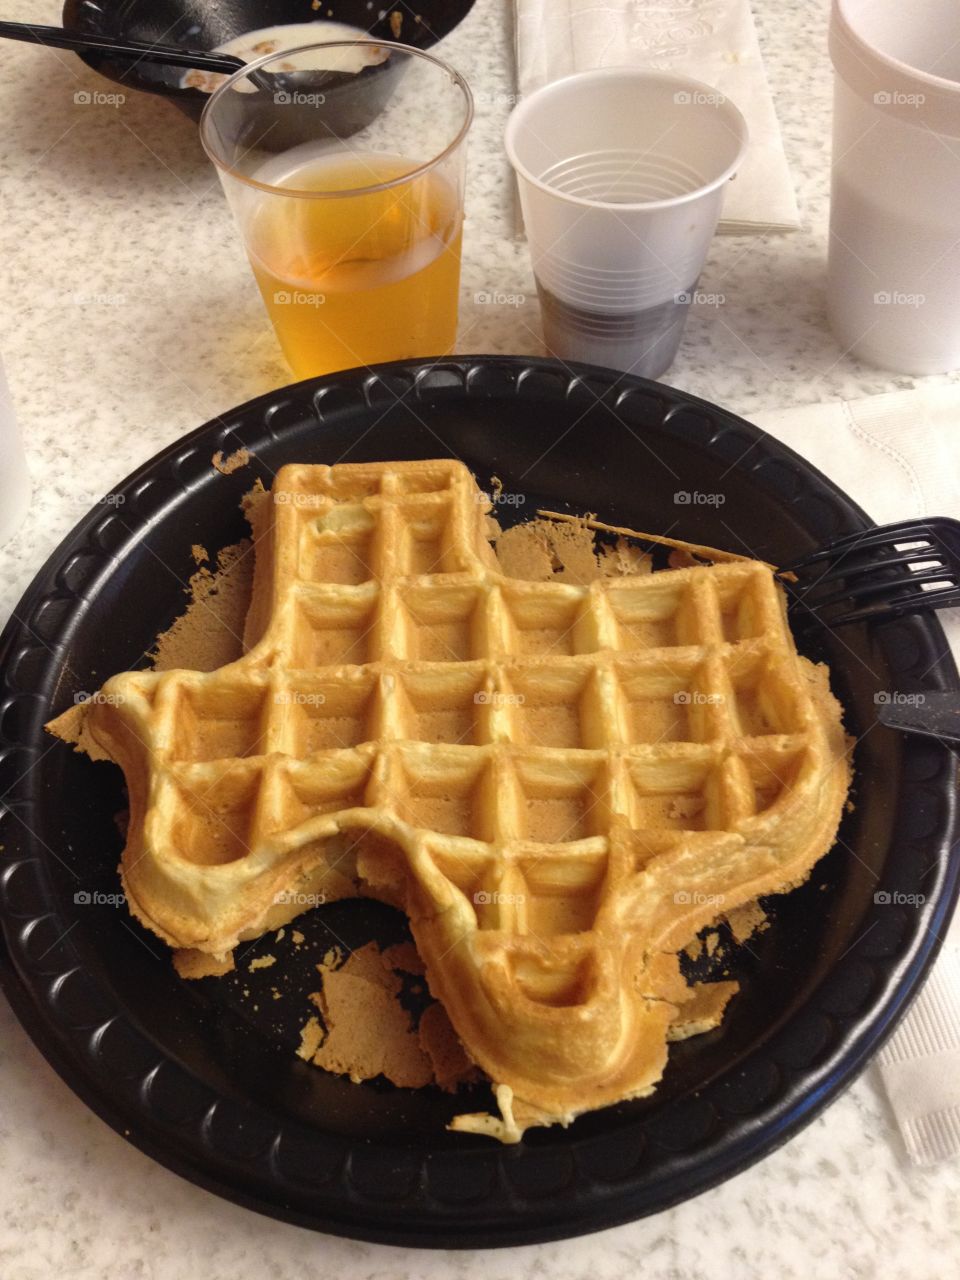 Everything is bigger in Texas . Breakfast